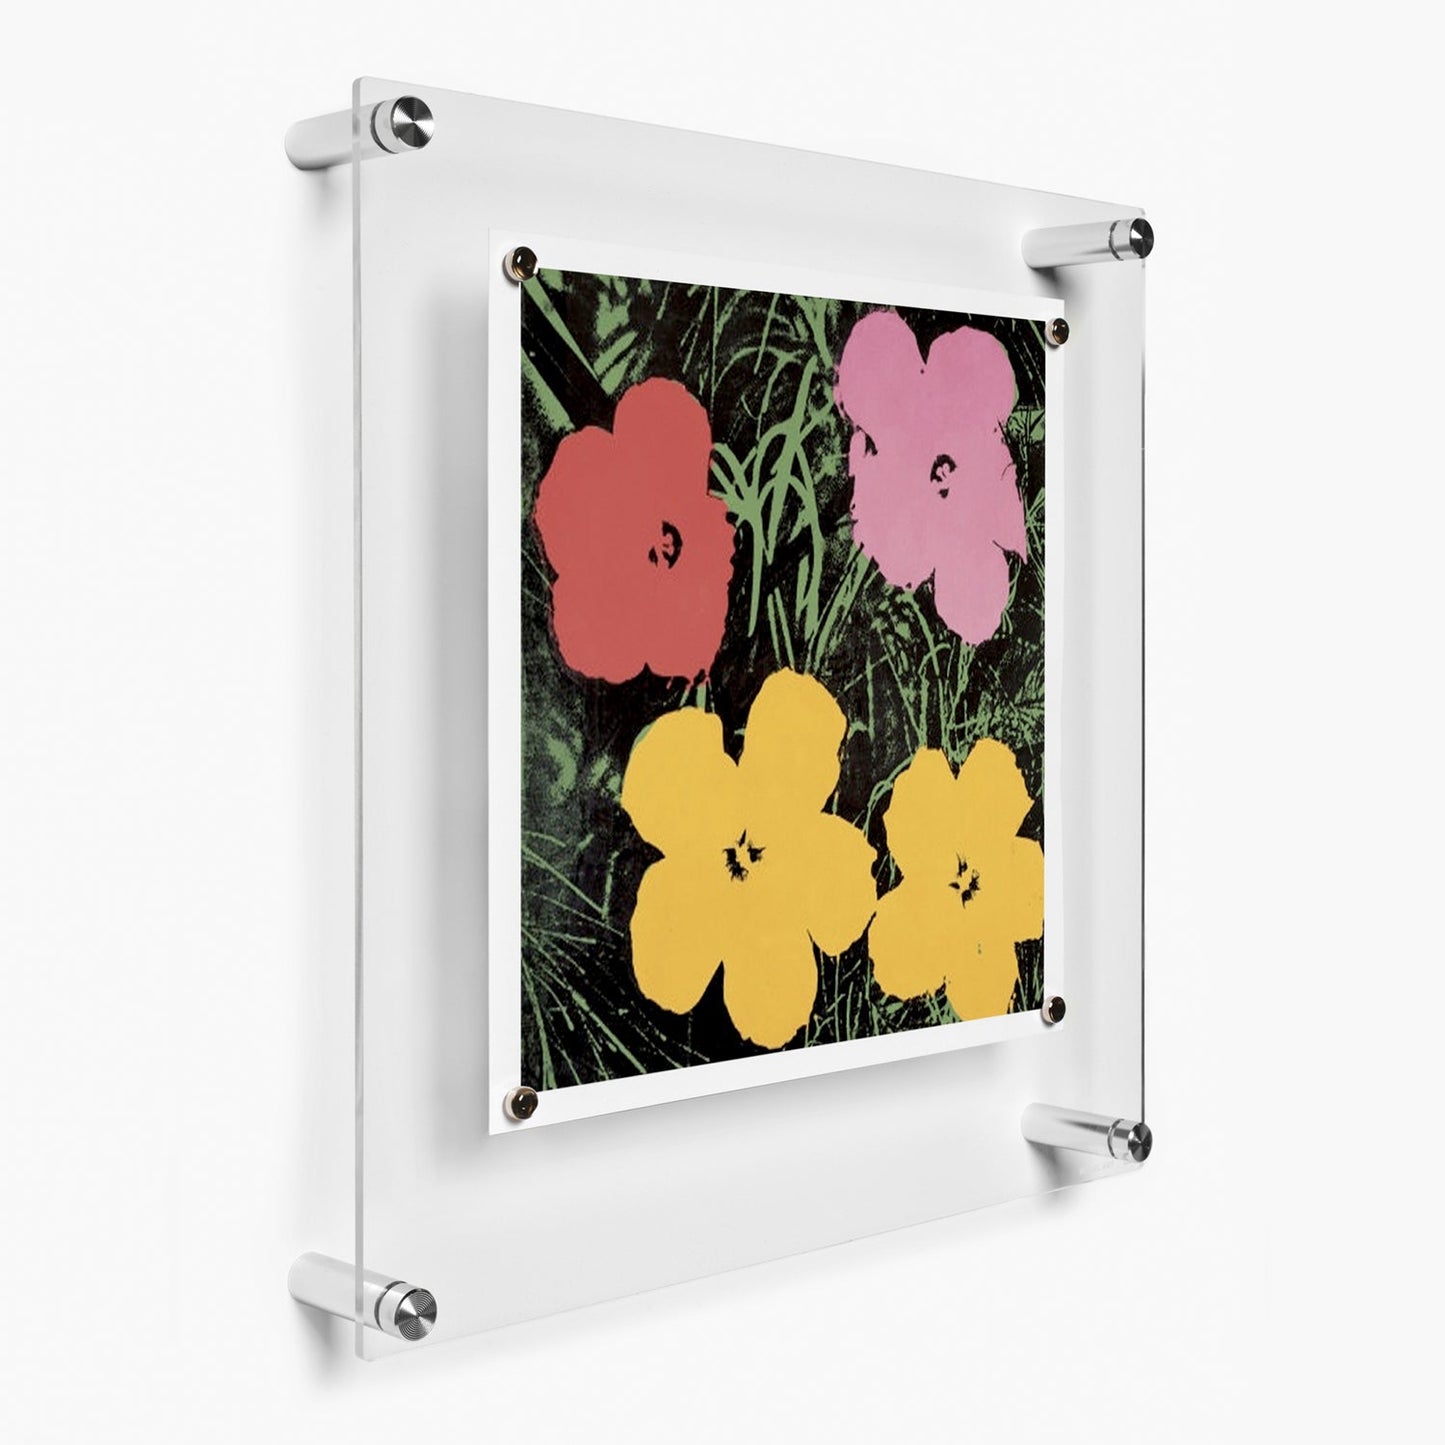 WS Single: 20" x 20" Single Panel Frame + Magnets